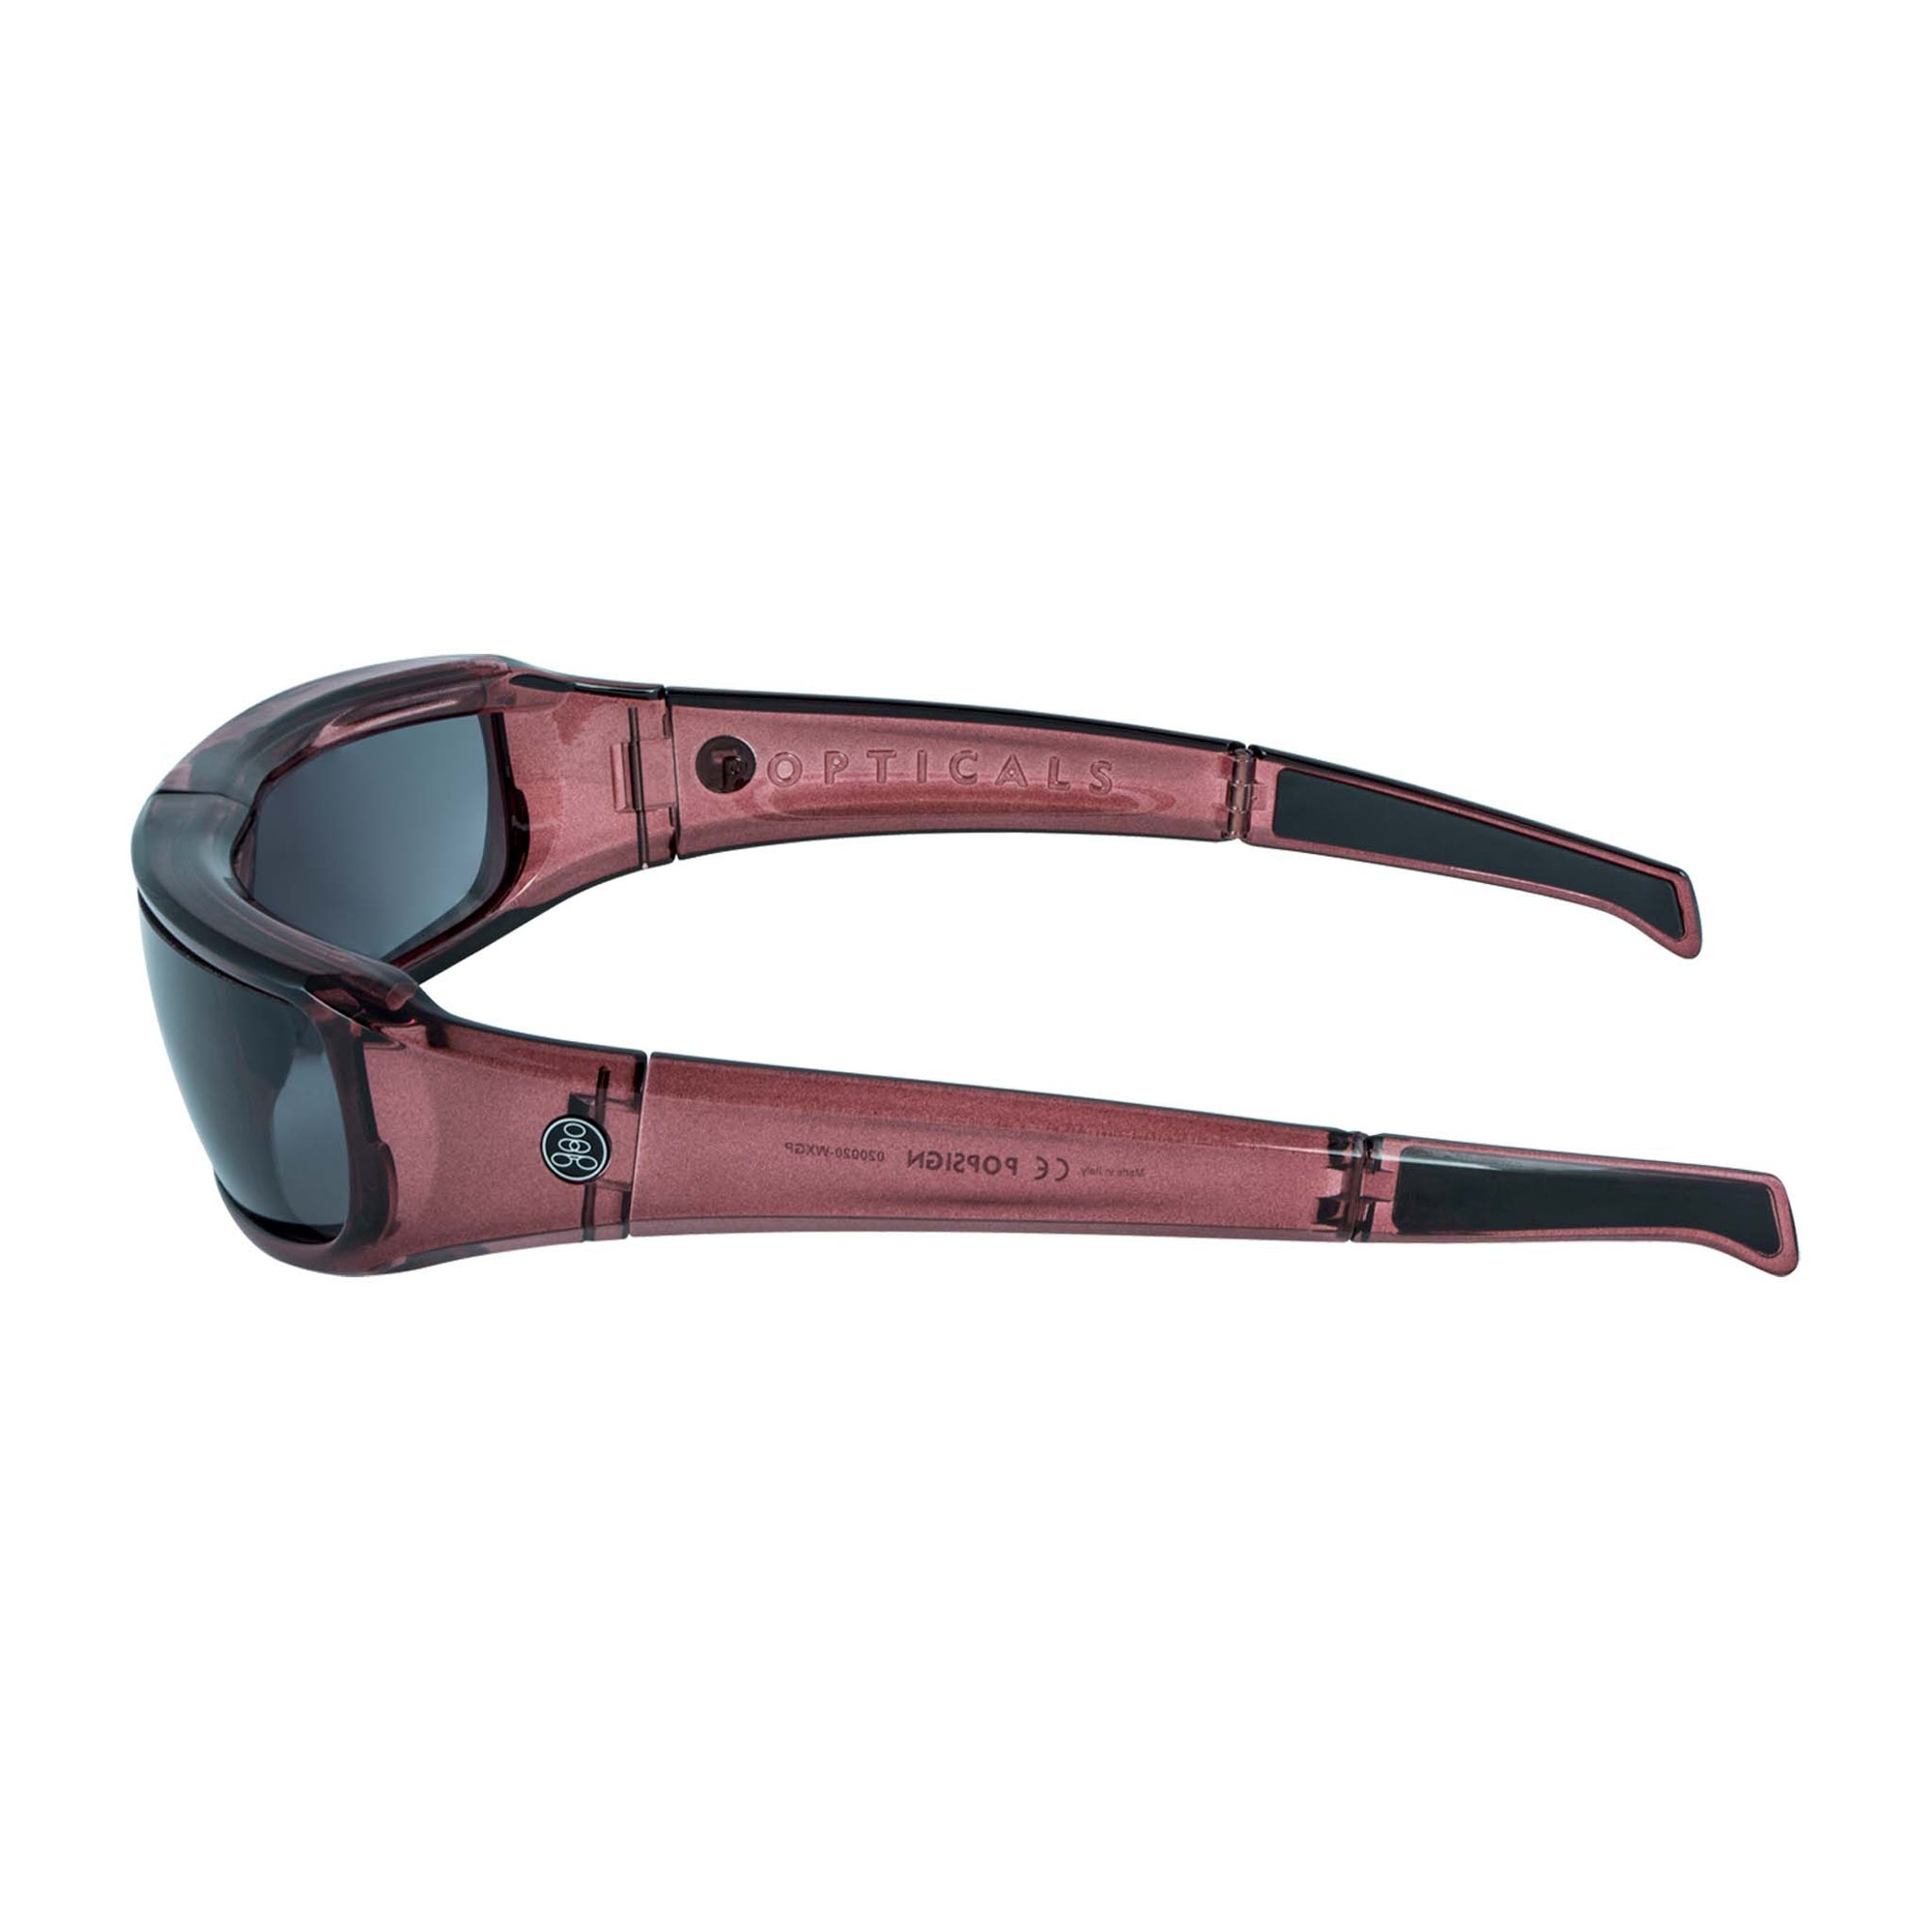 Popticals, Premium Compact Sunglasses, PopSign, 020020-WXGP, Polarized Sunglasses, Gloss Wine Crystal Frame, Gray Lenses, Side View